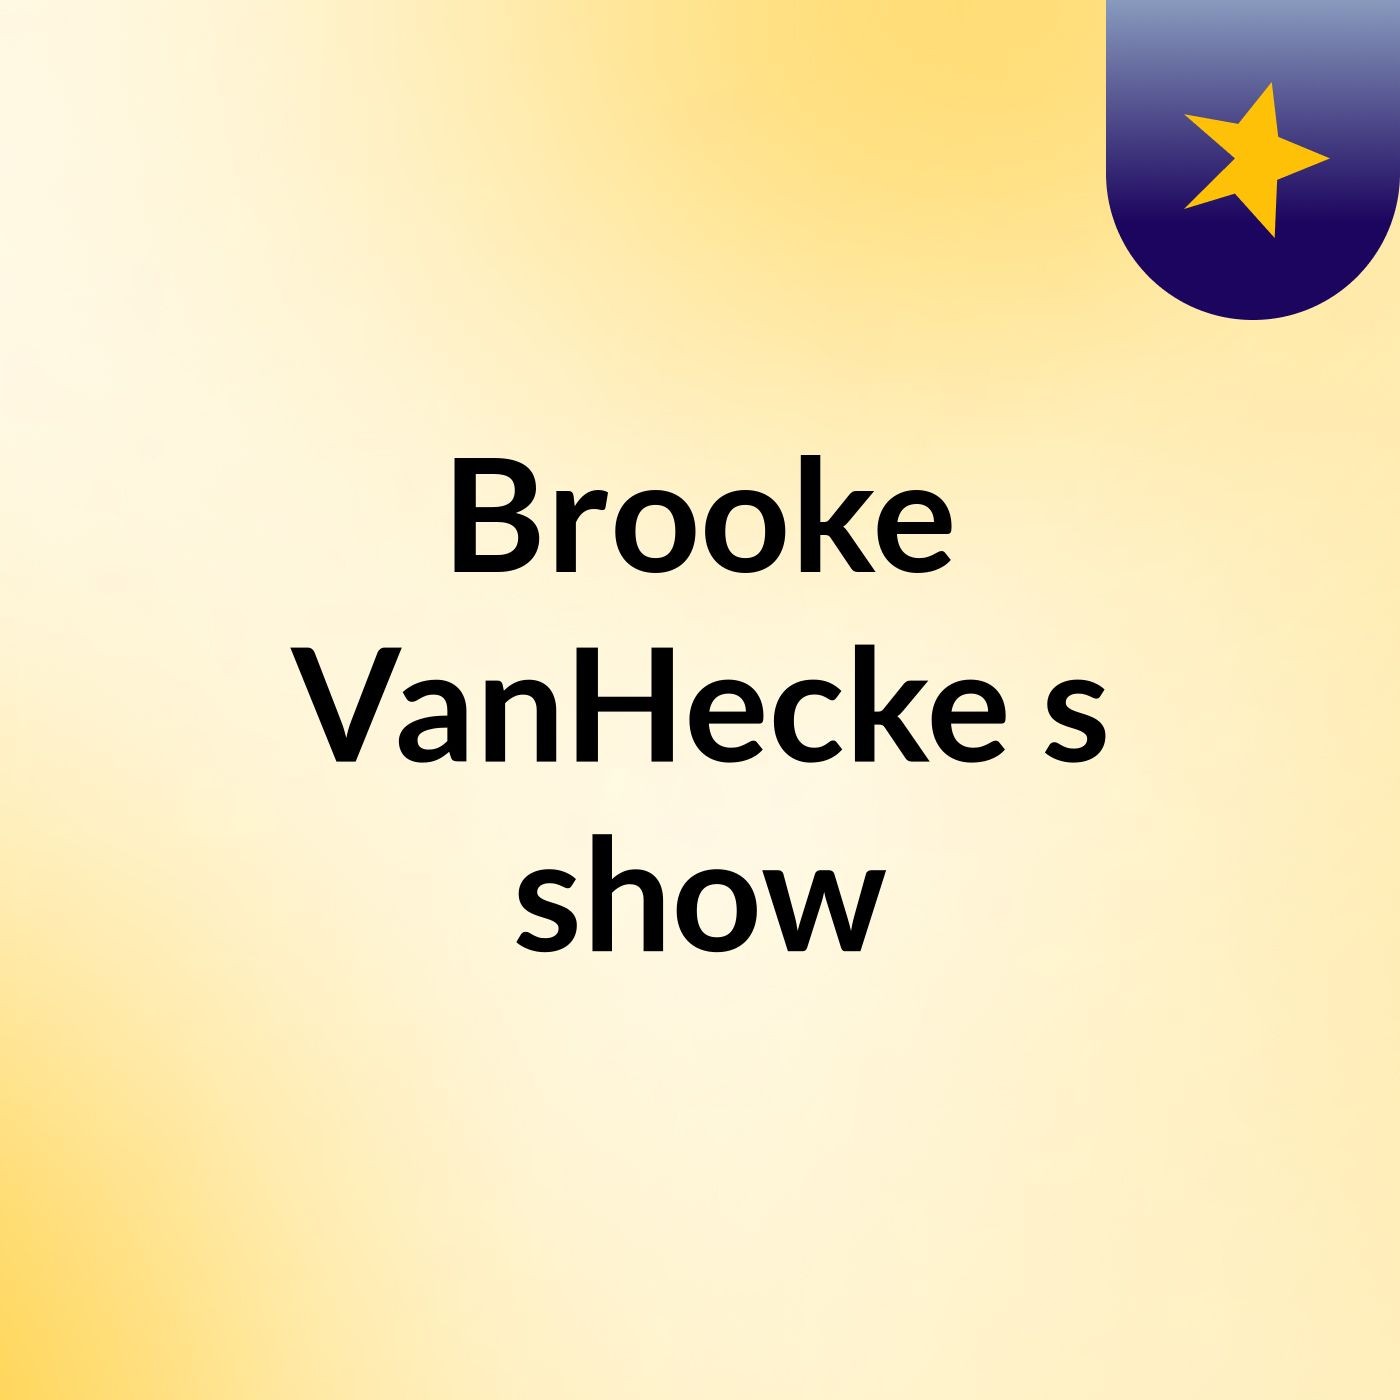 Brooke VanHecke's show